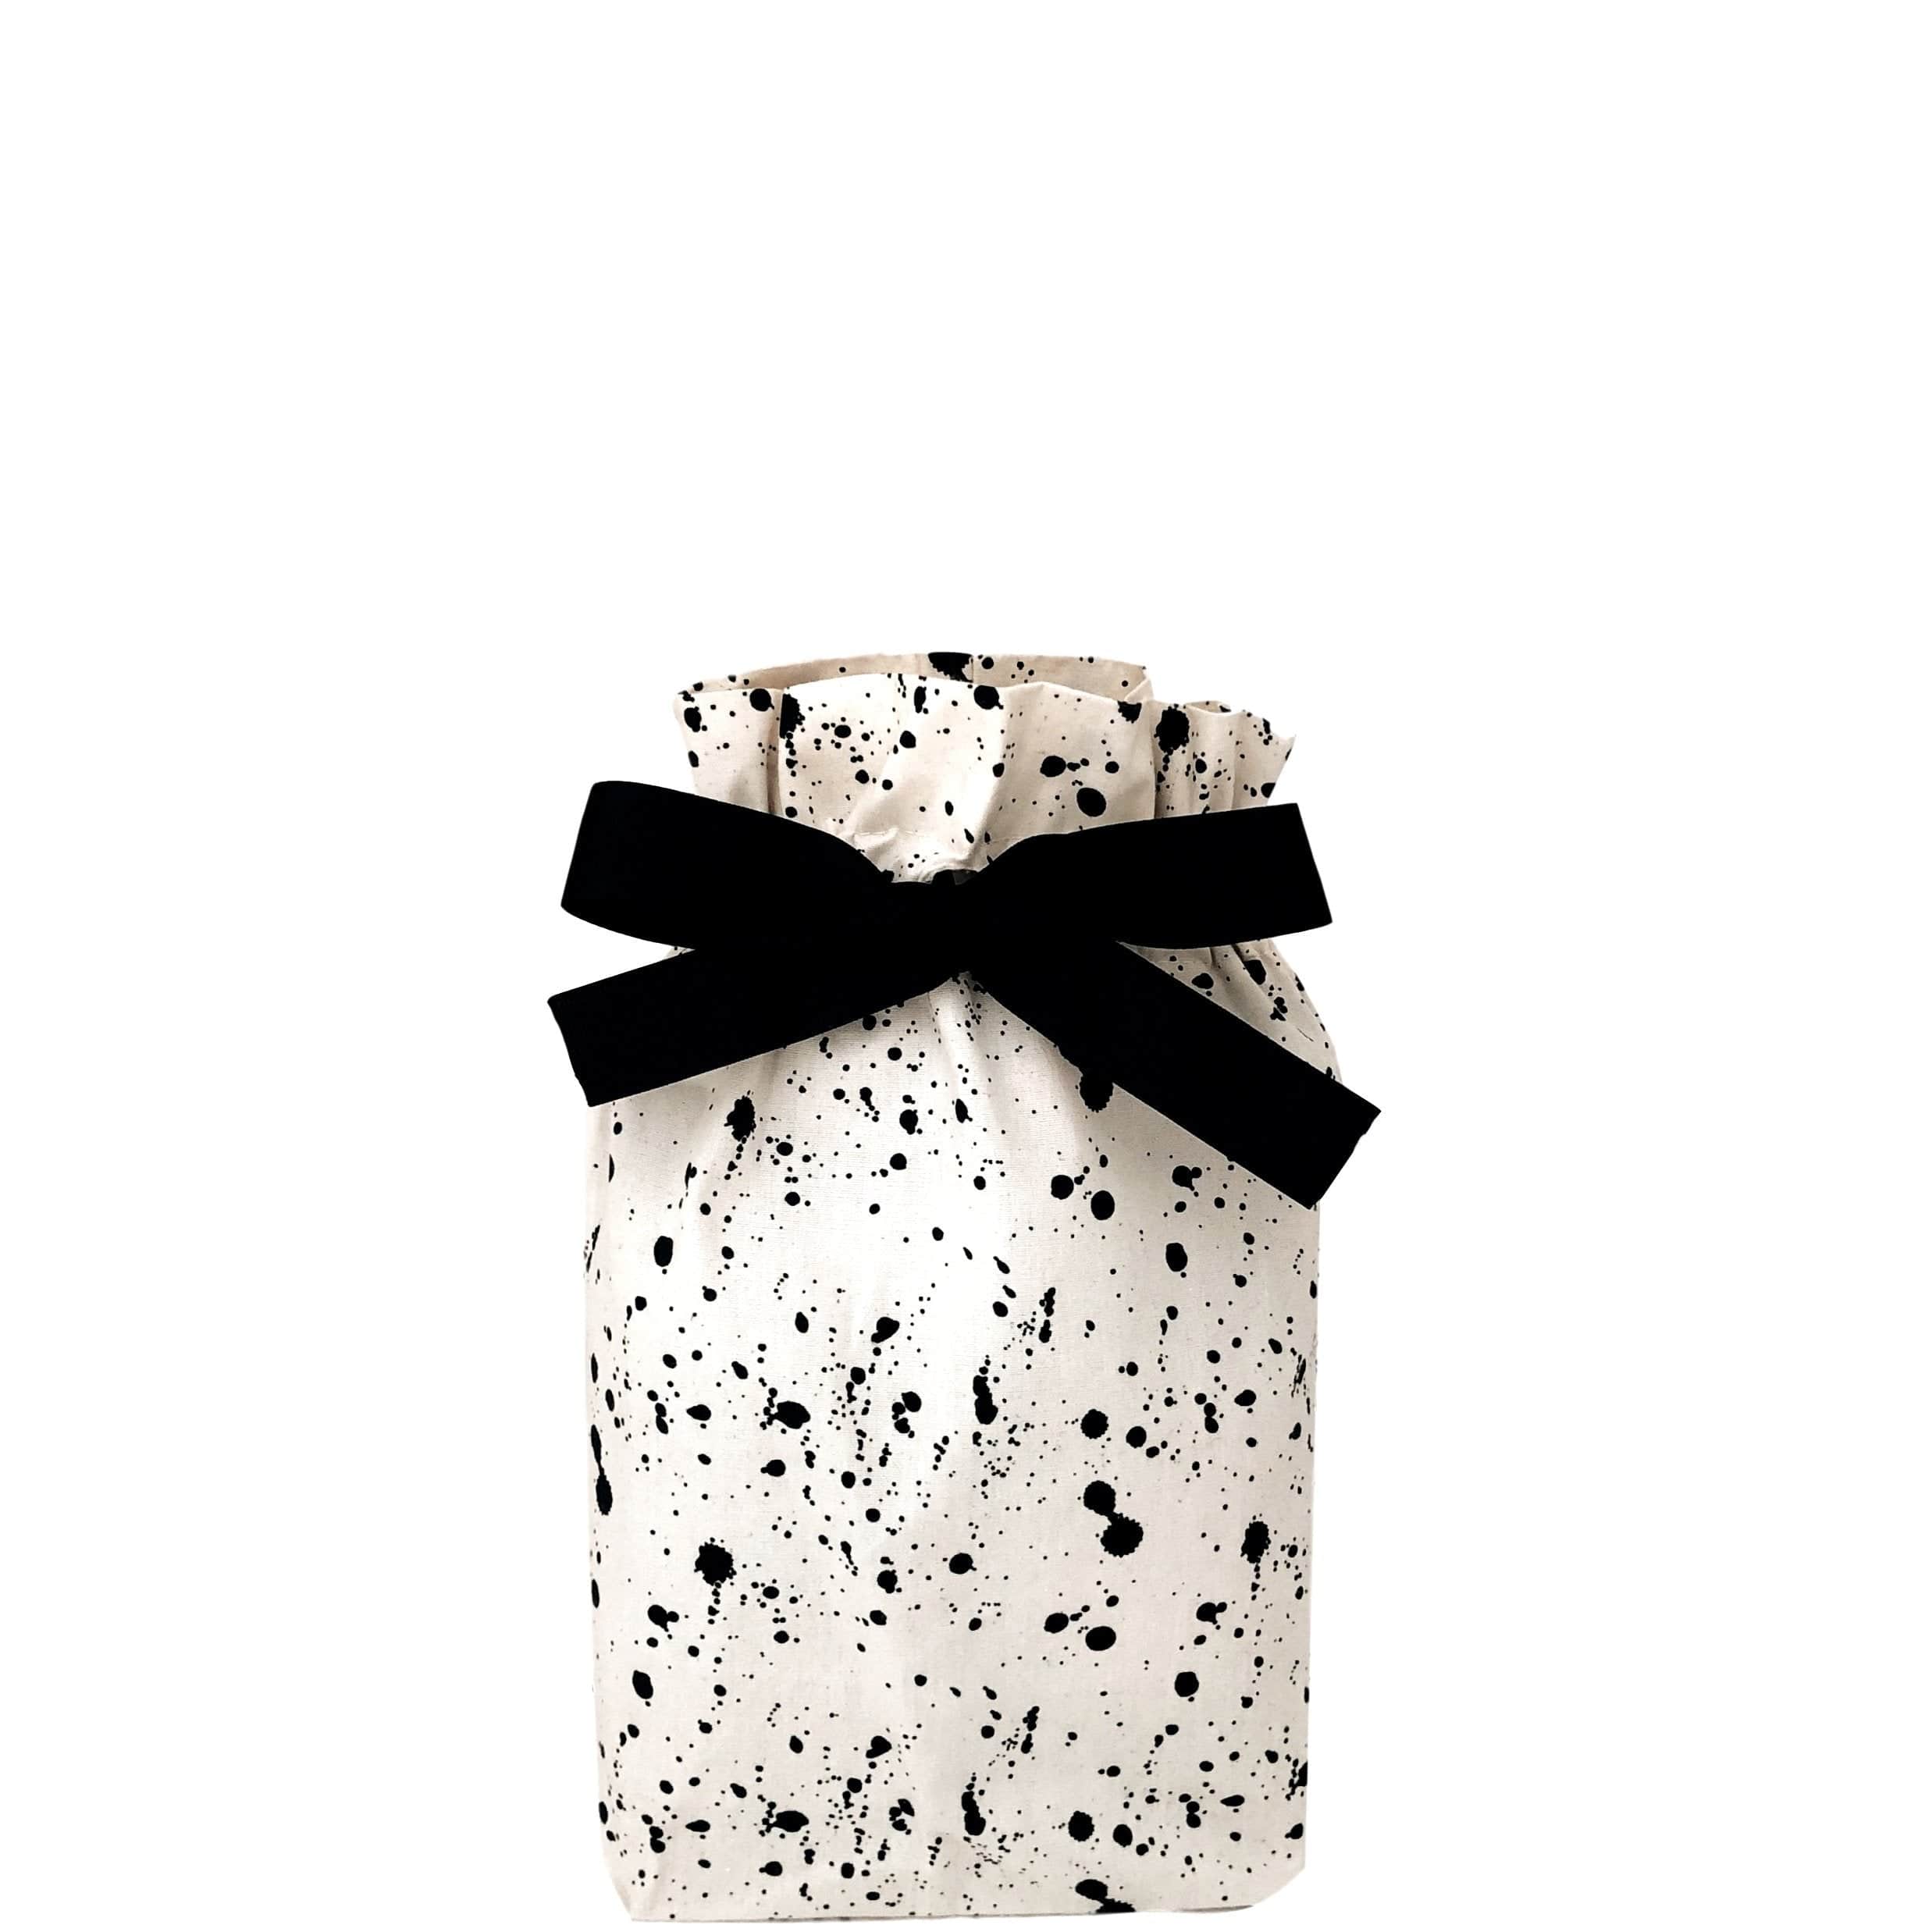 Small reusable gift bag with black splatter paint across it. 